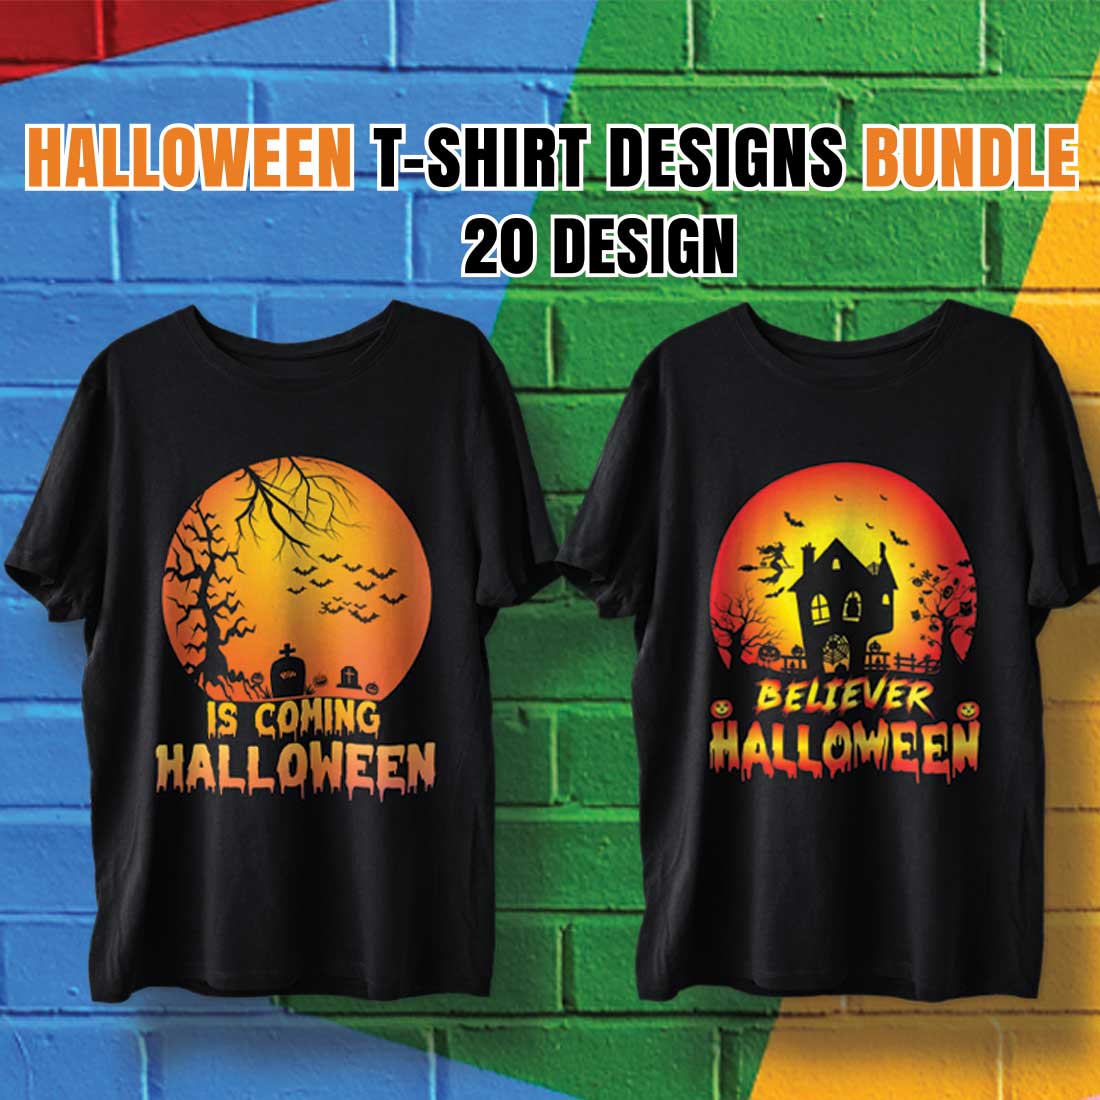 Halloween T-shirt Bundle 20 Design facebook image.